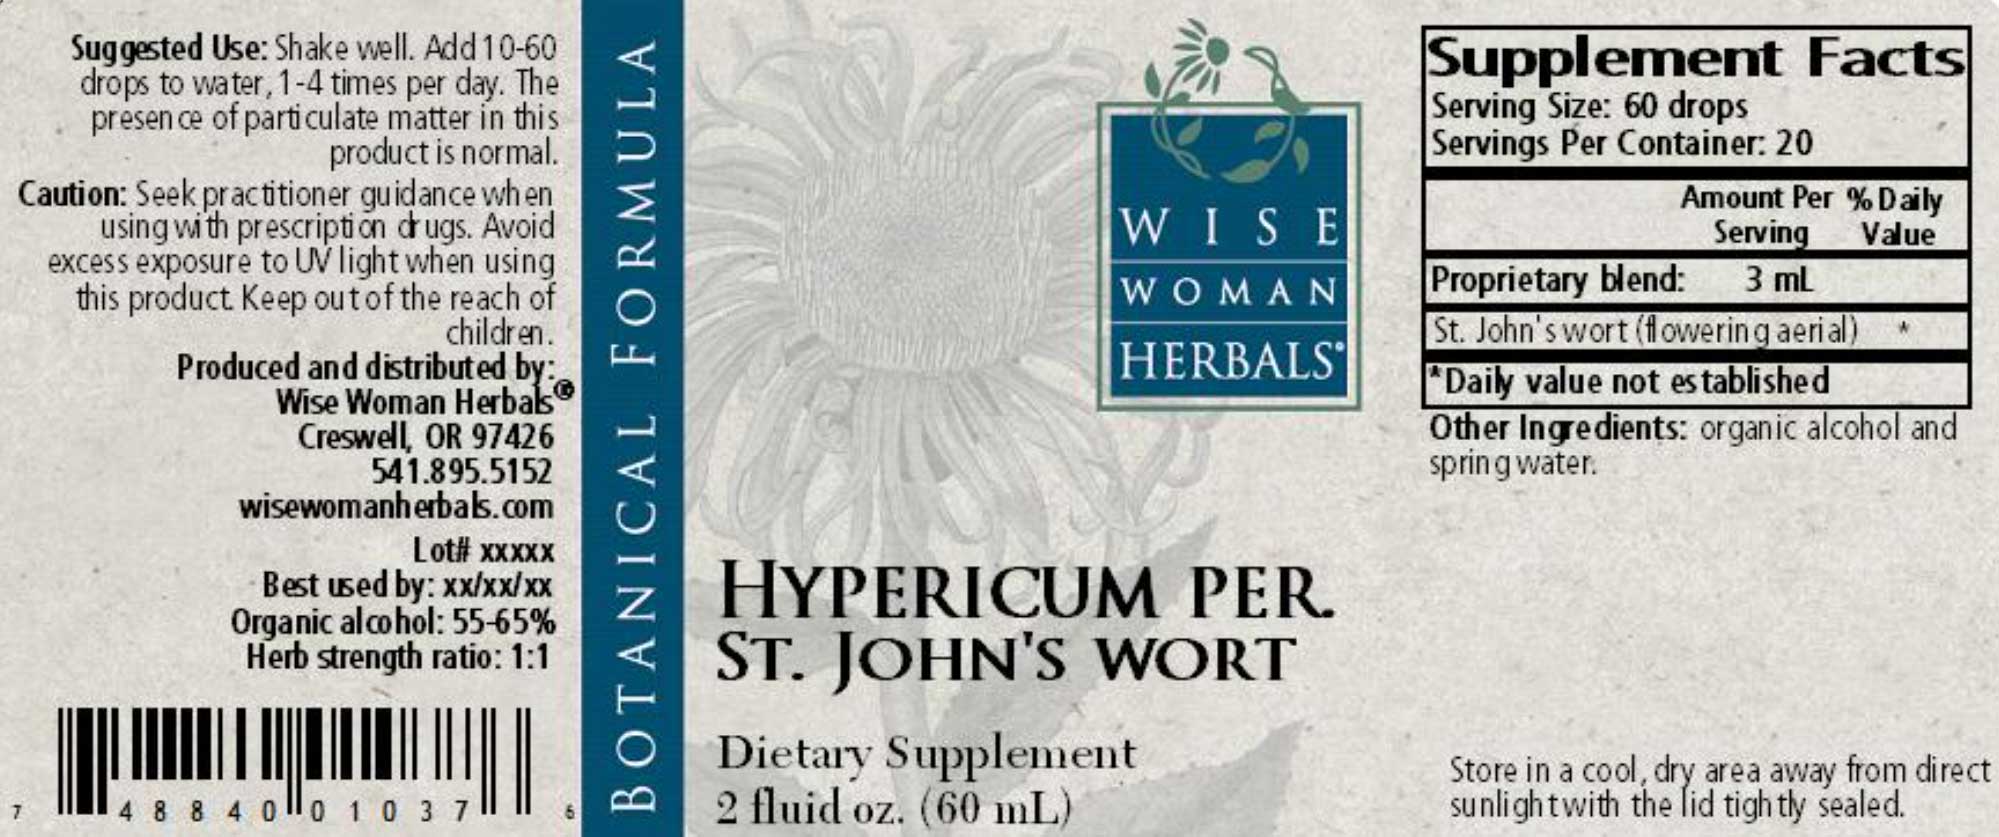 Wise Woman Herbals Hypericum Perforatum St. John's Wort Label